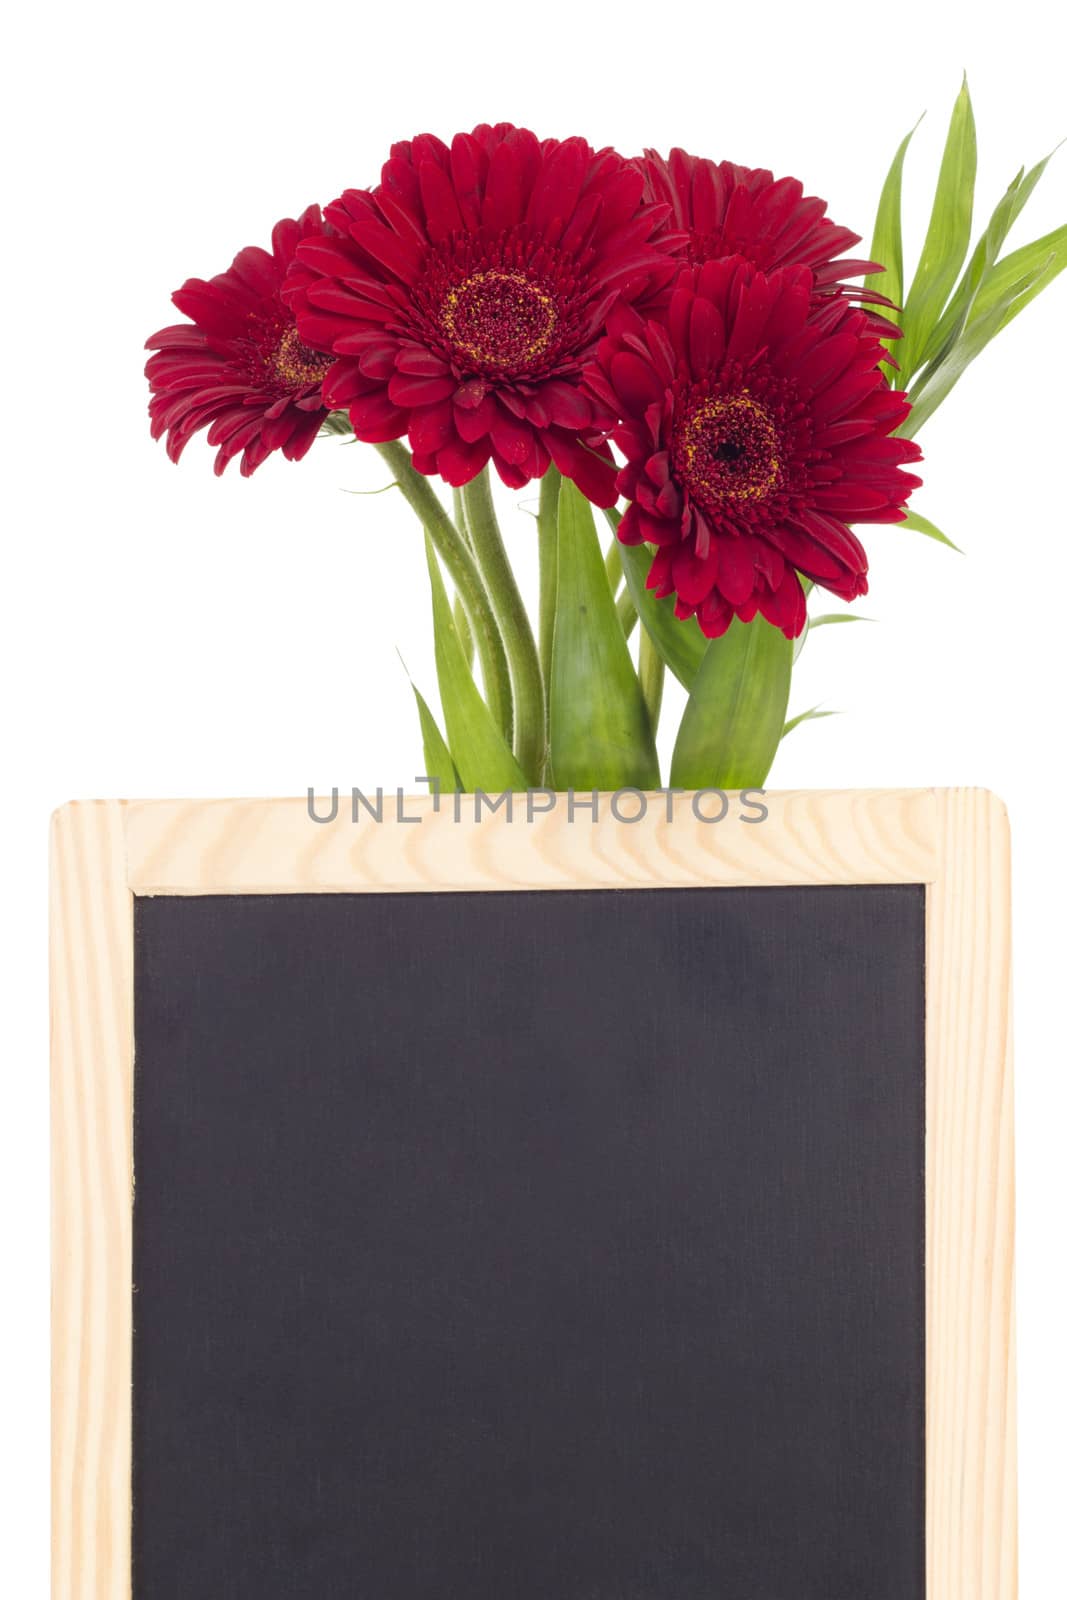 Four beautiful red gerberas with blank blackboard